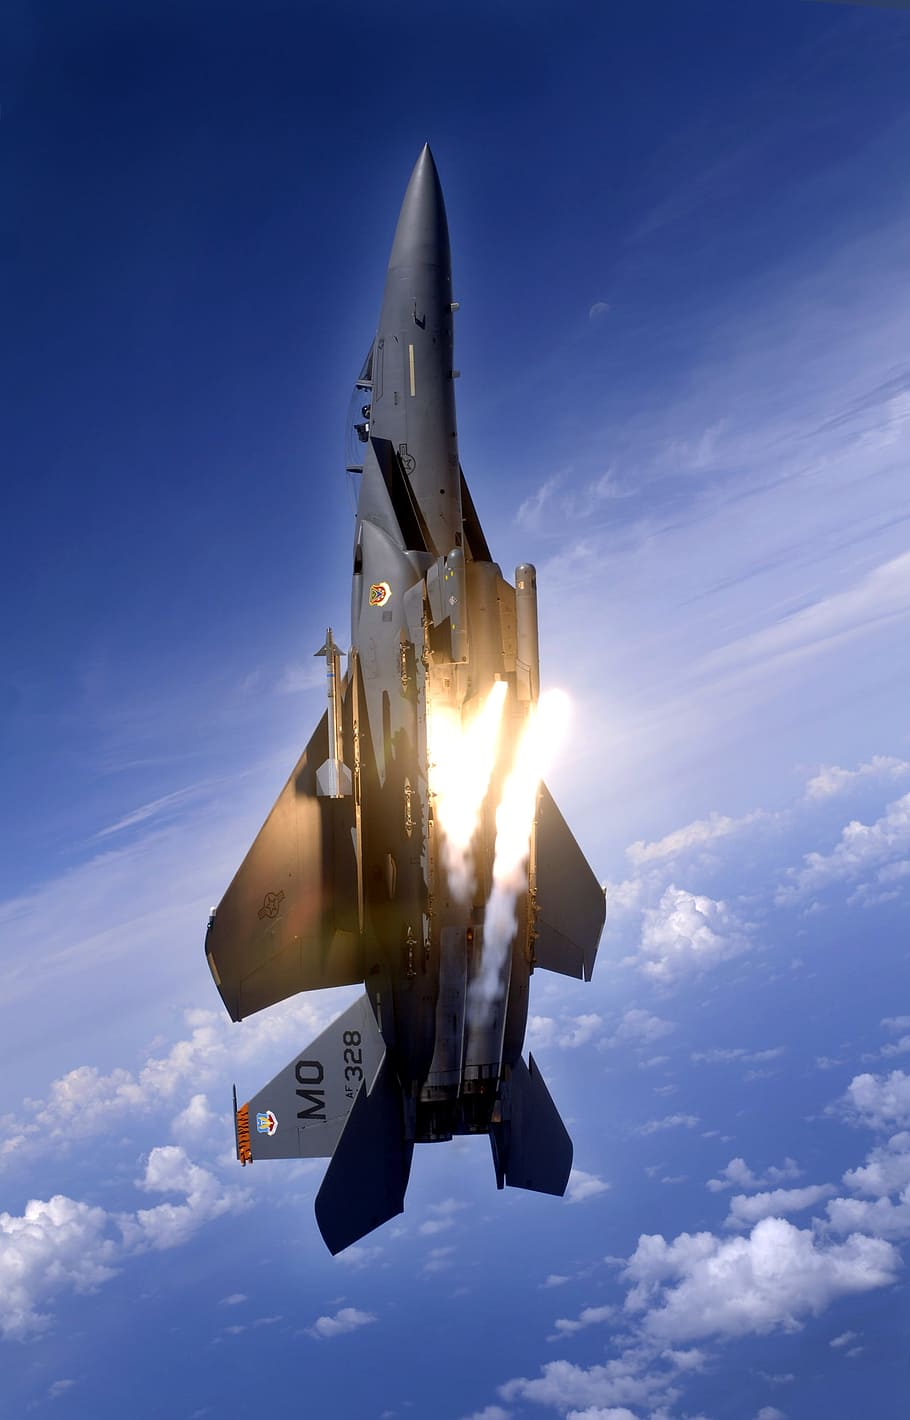 grey, f-15, f -15 jet tempur, Jet, Fighter, Vertical, Climb, Aircraft, pesawat terbang, militer